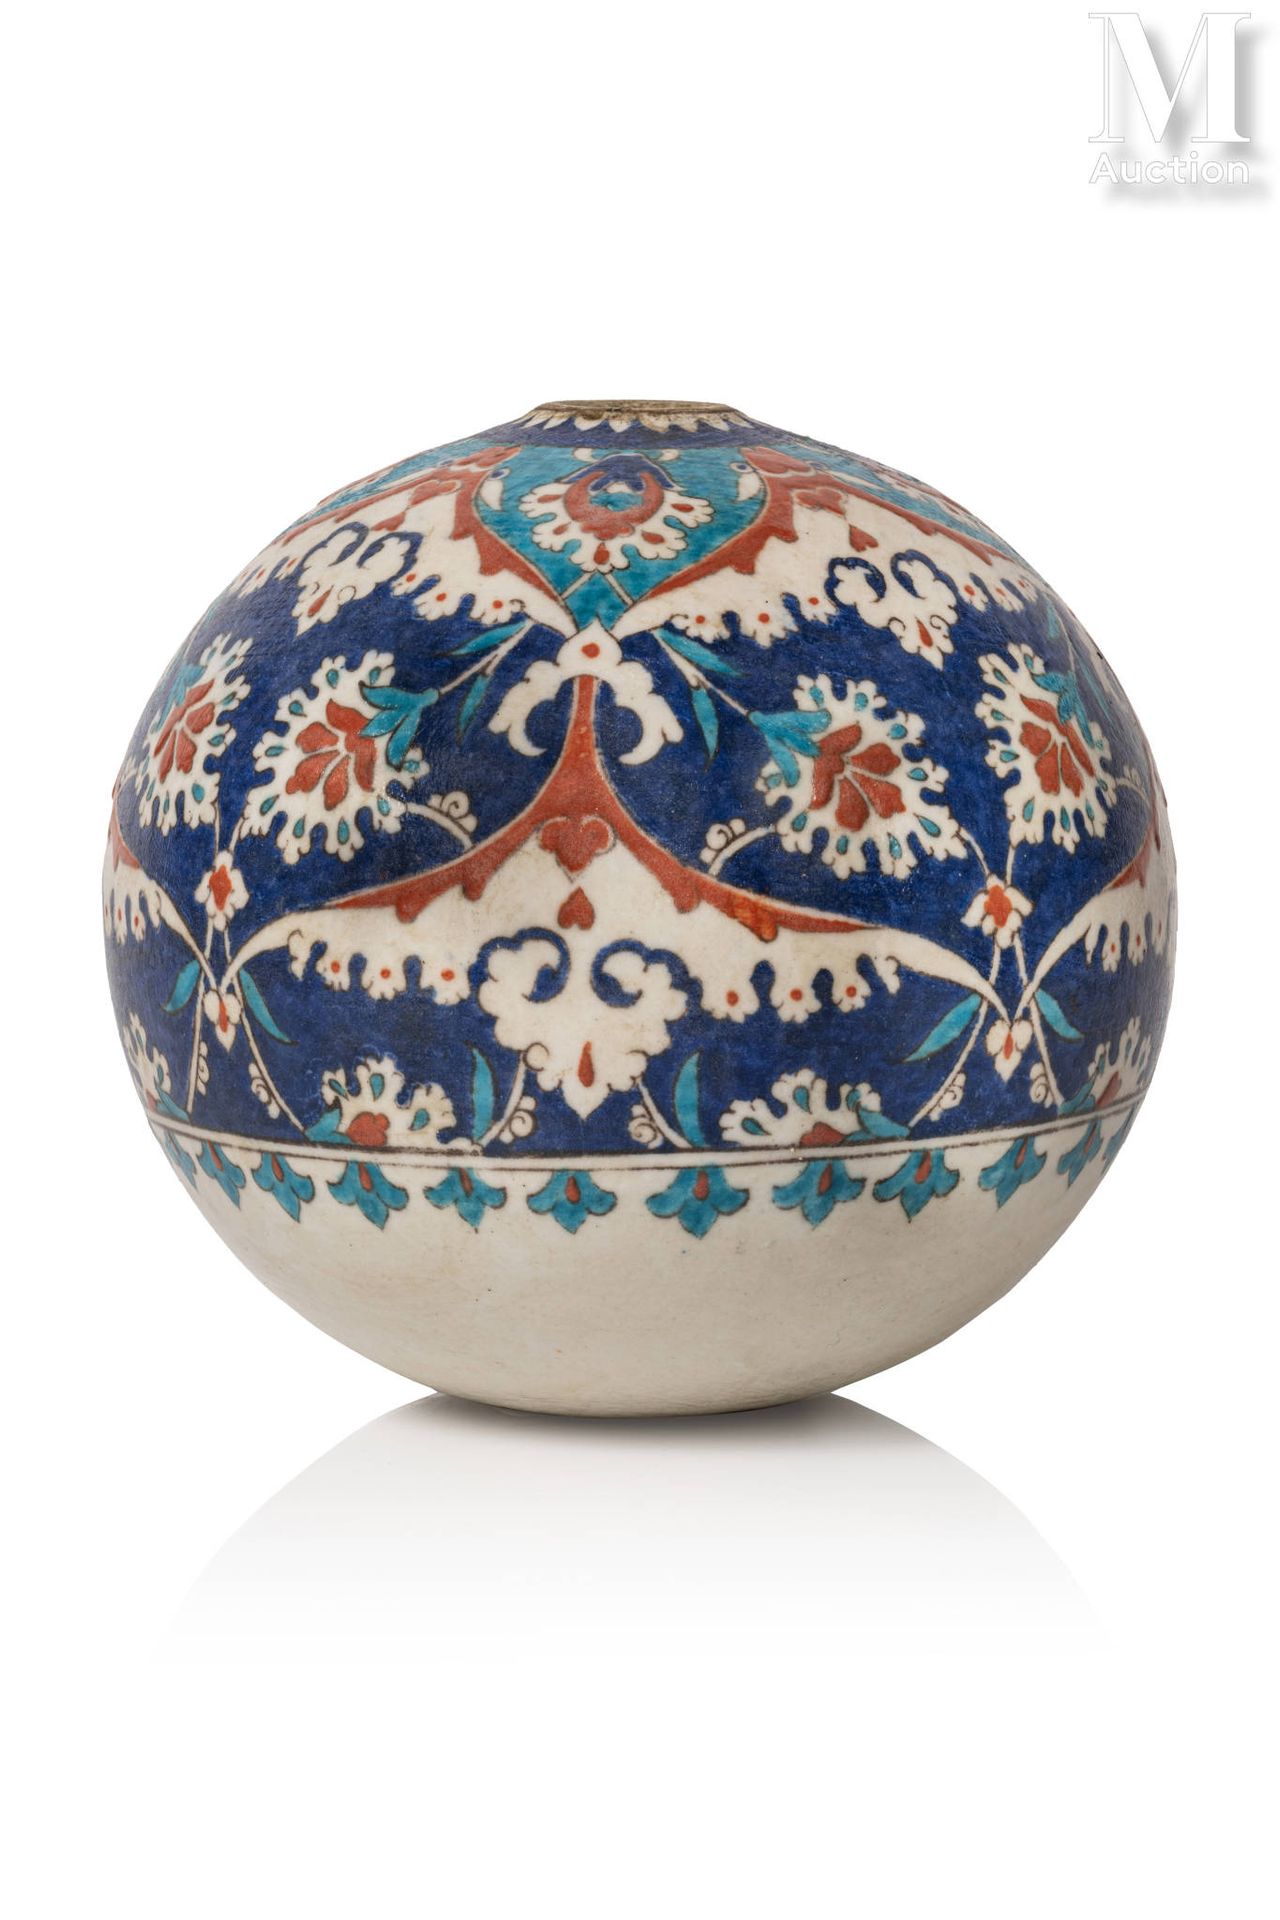 Suspension en forme de sphère Turkey, Iznik or Kutahya, 16th-18th century
Spheri&hellip;